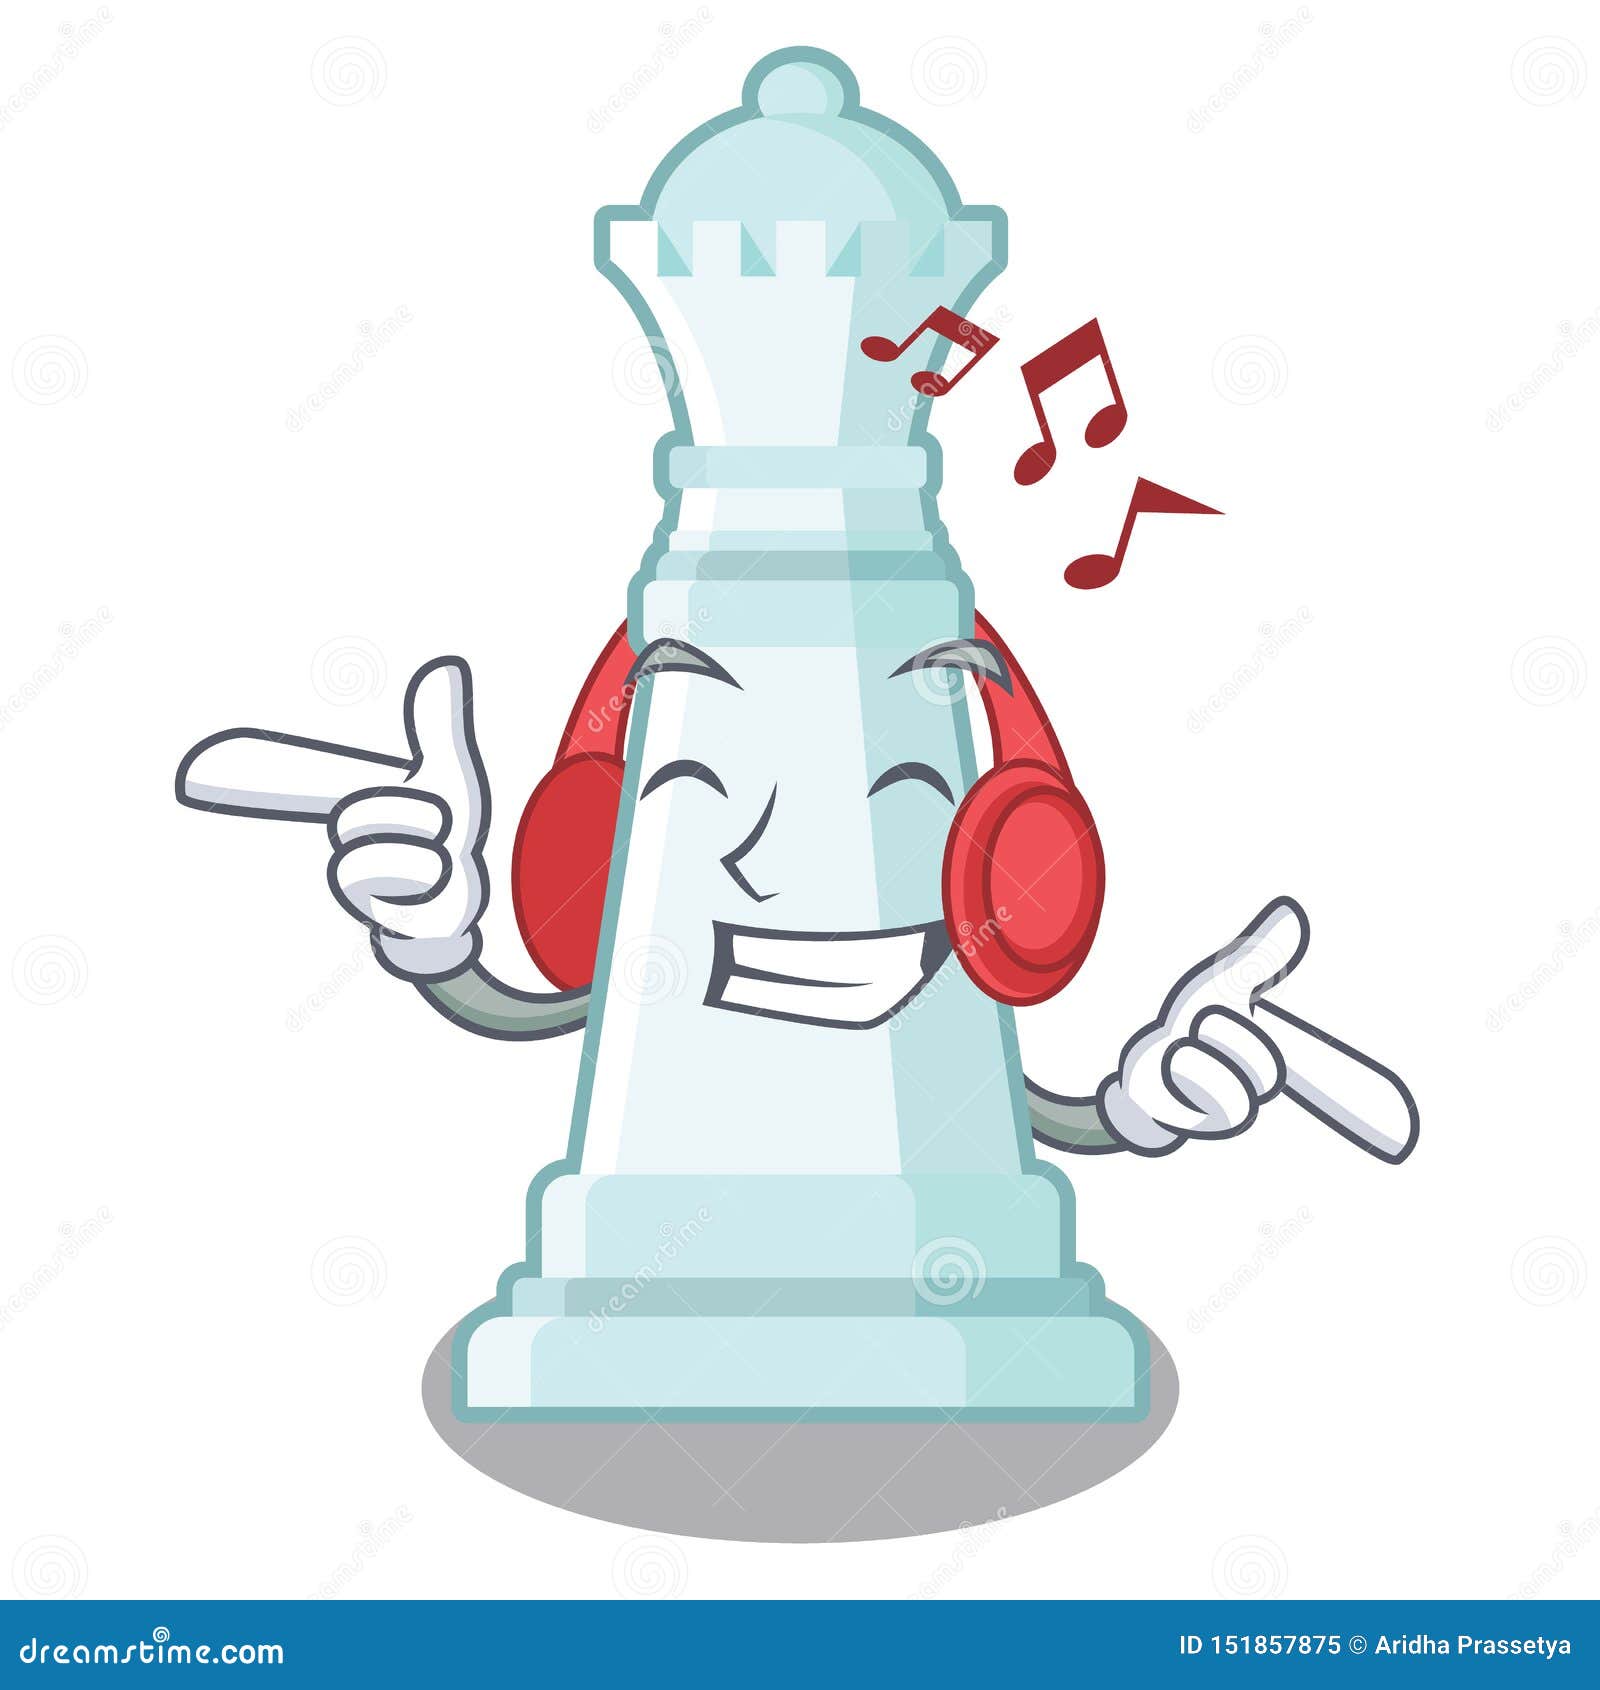 listening music chess queen in the cartoon 